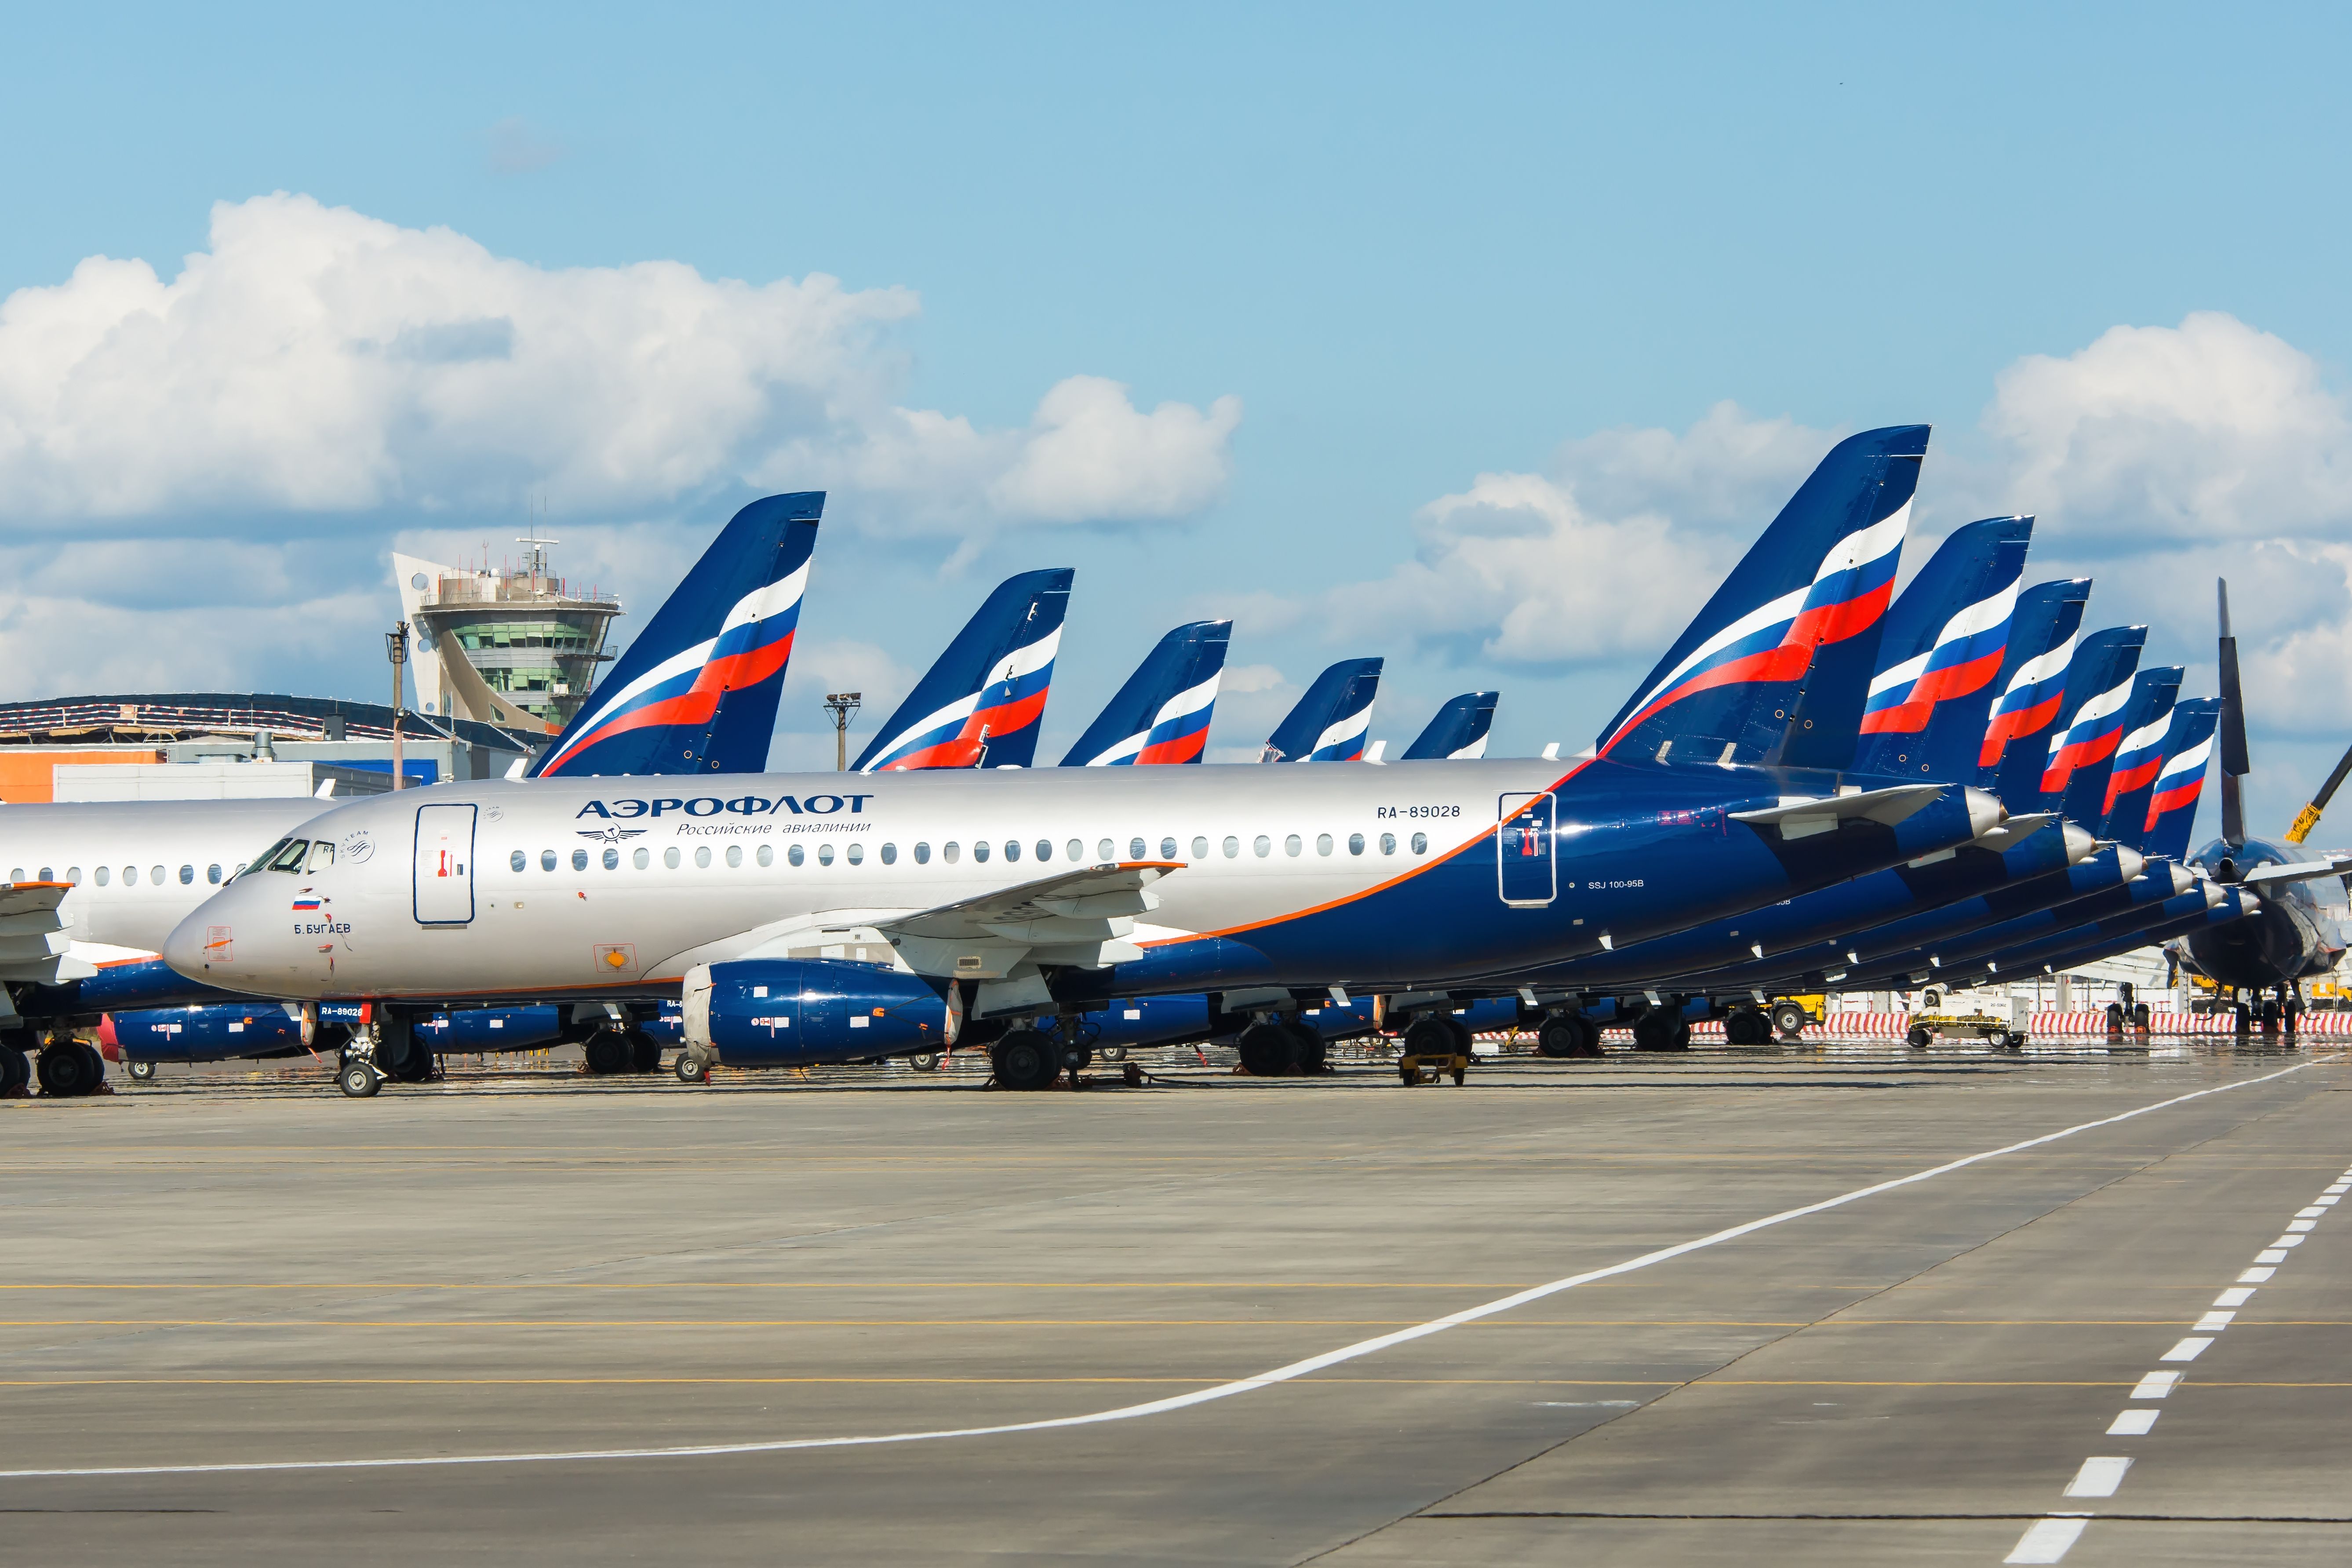 Aeroflot Sukhoi Superjet 100 aircraft lined up